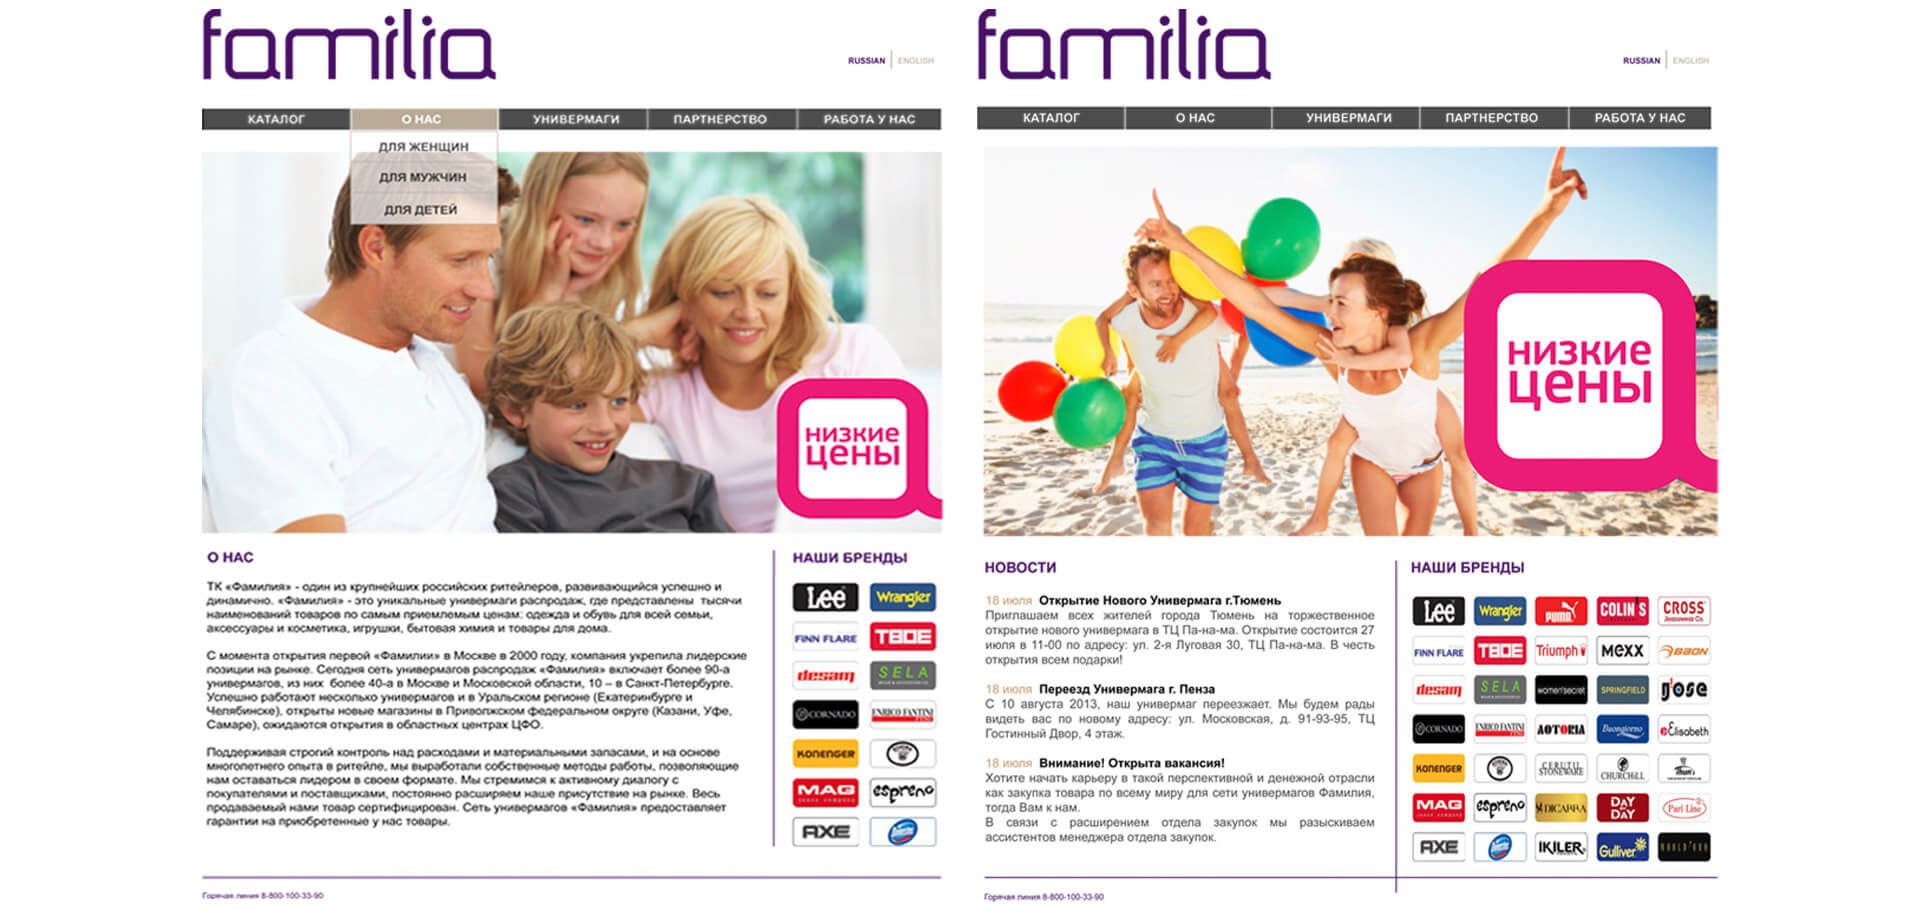 Familia fashion stores brand identity Russia, communications